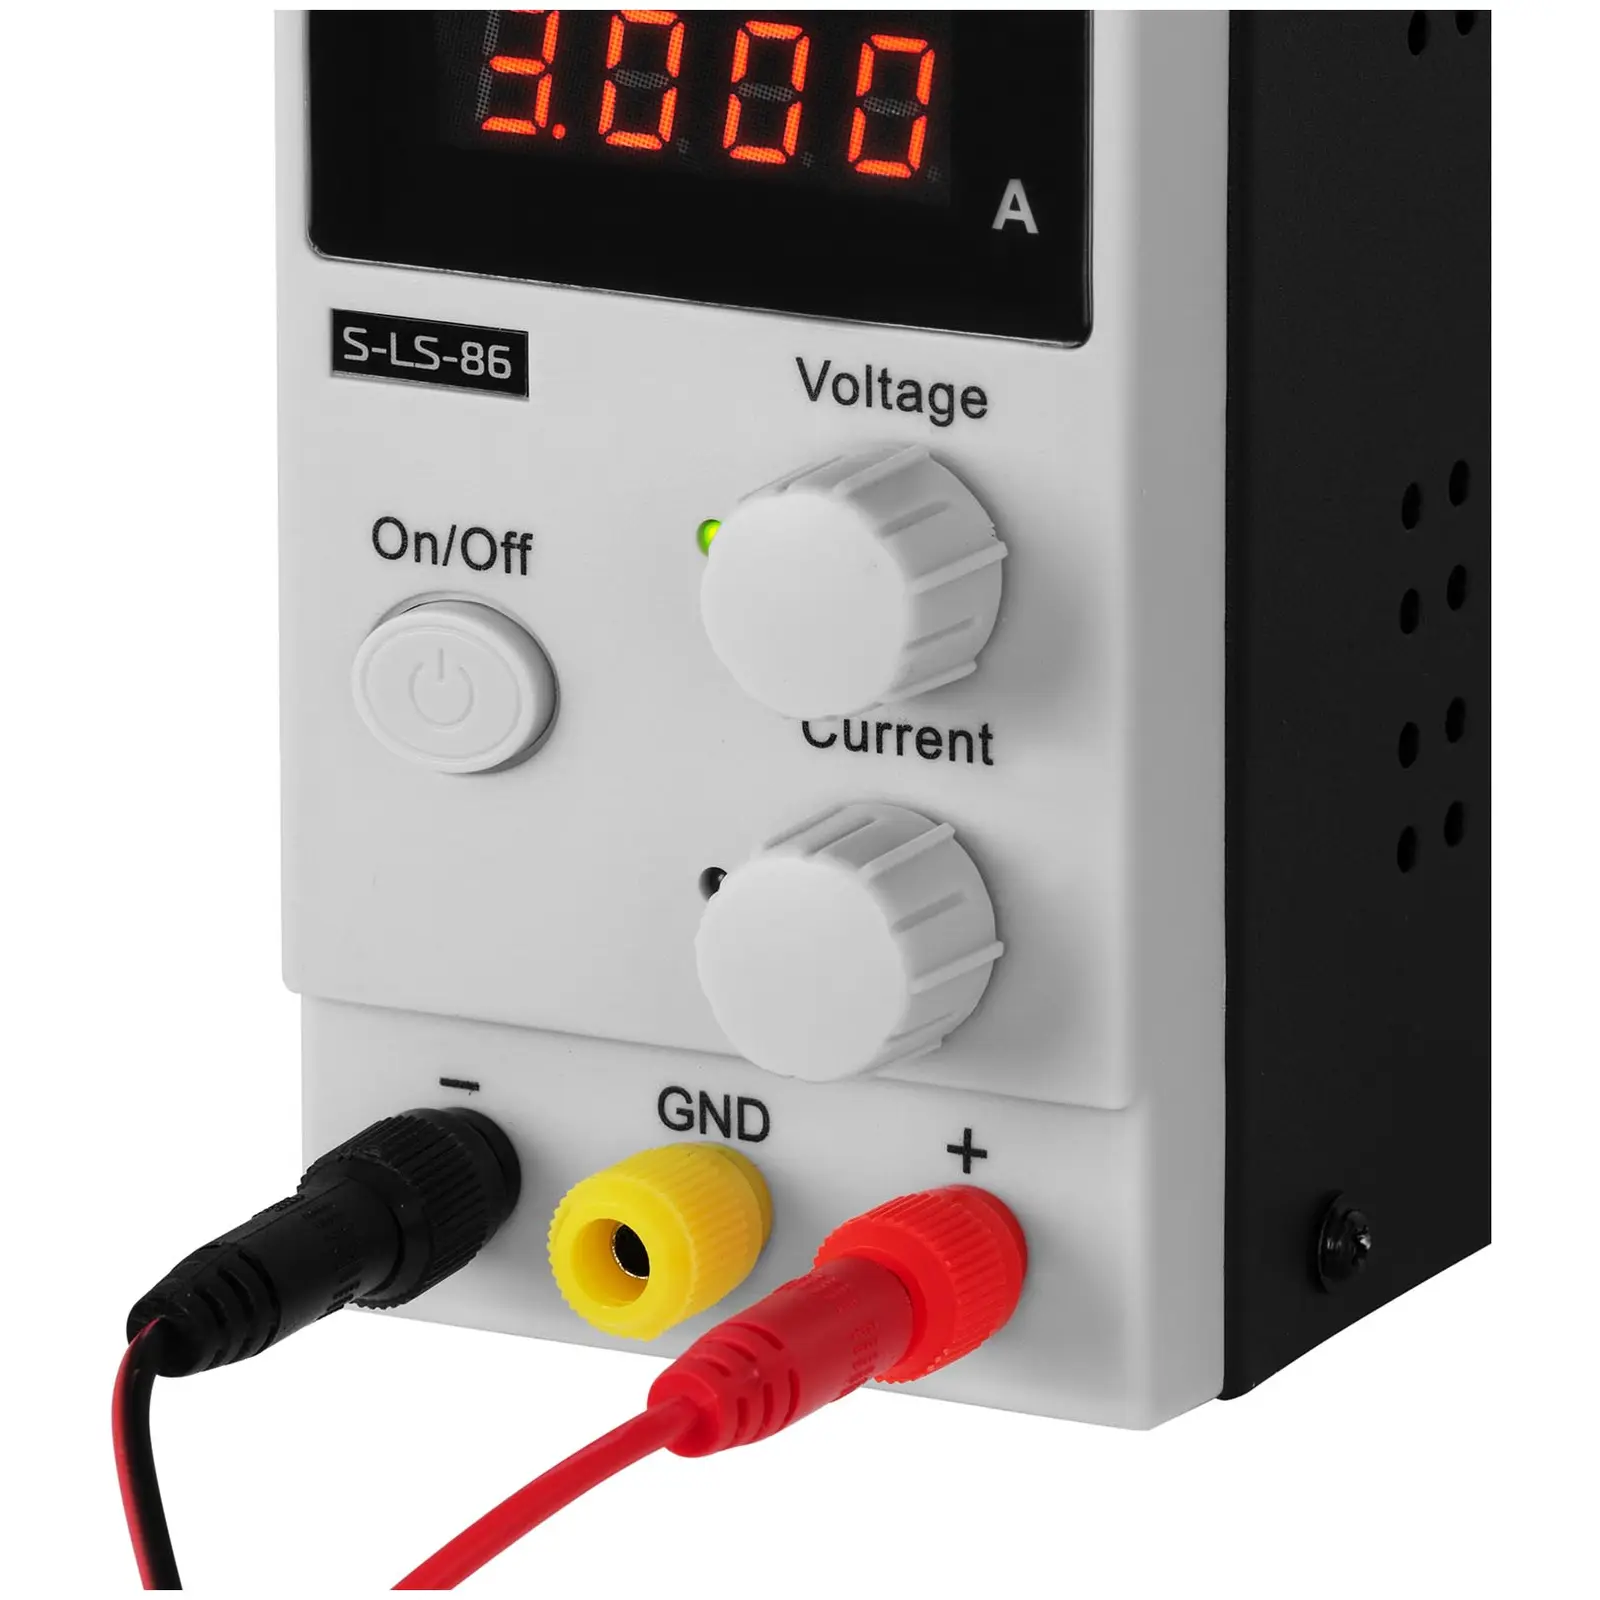 Alimentatore switching regolabile - 0-100 V - 0-3 A CC - 300 W - Protezione OPP e OTP - Grande display LED